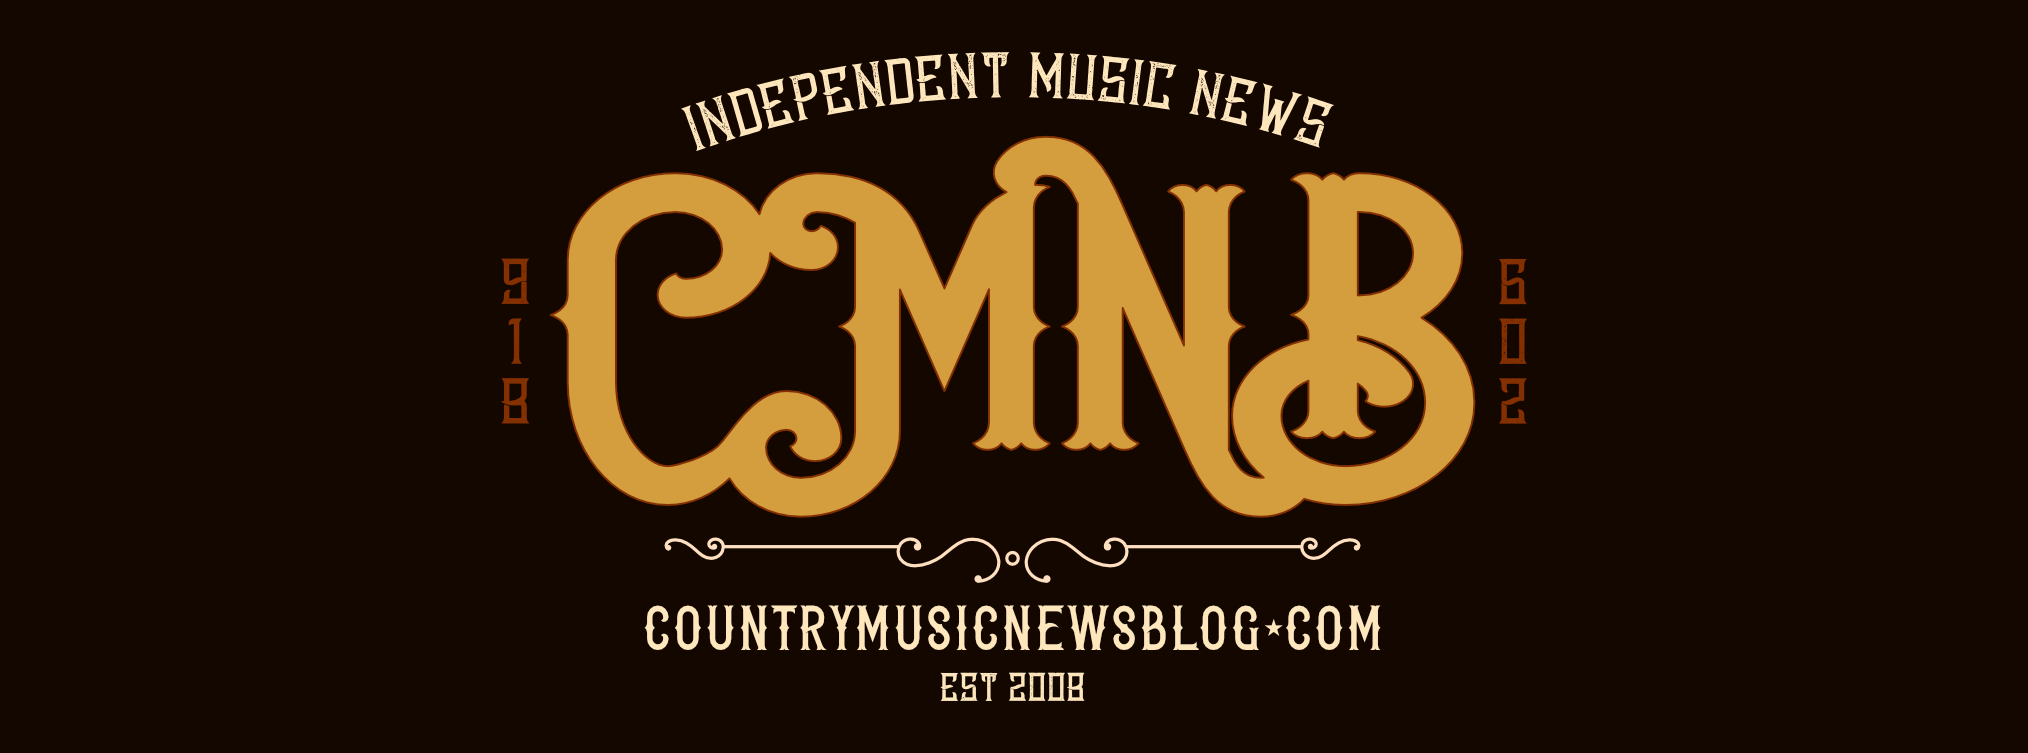 Country Music News Blog